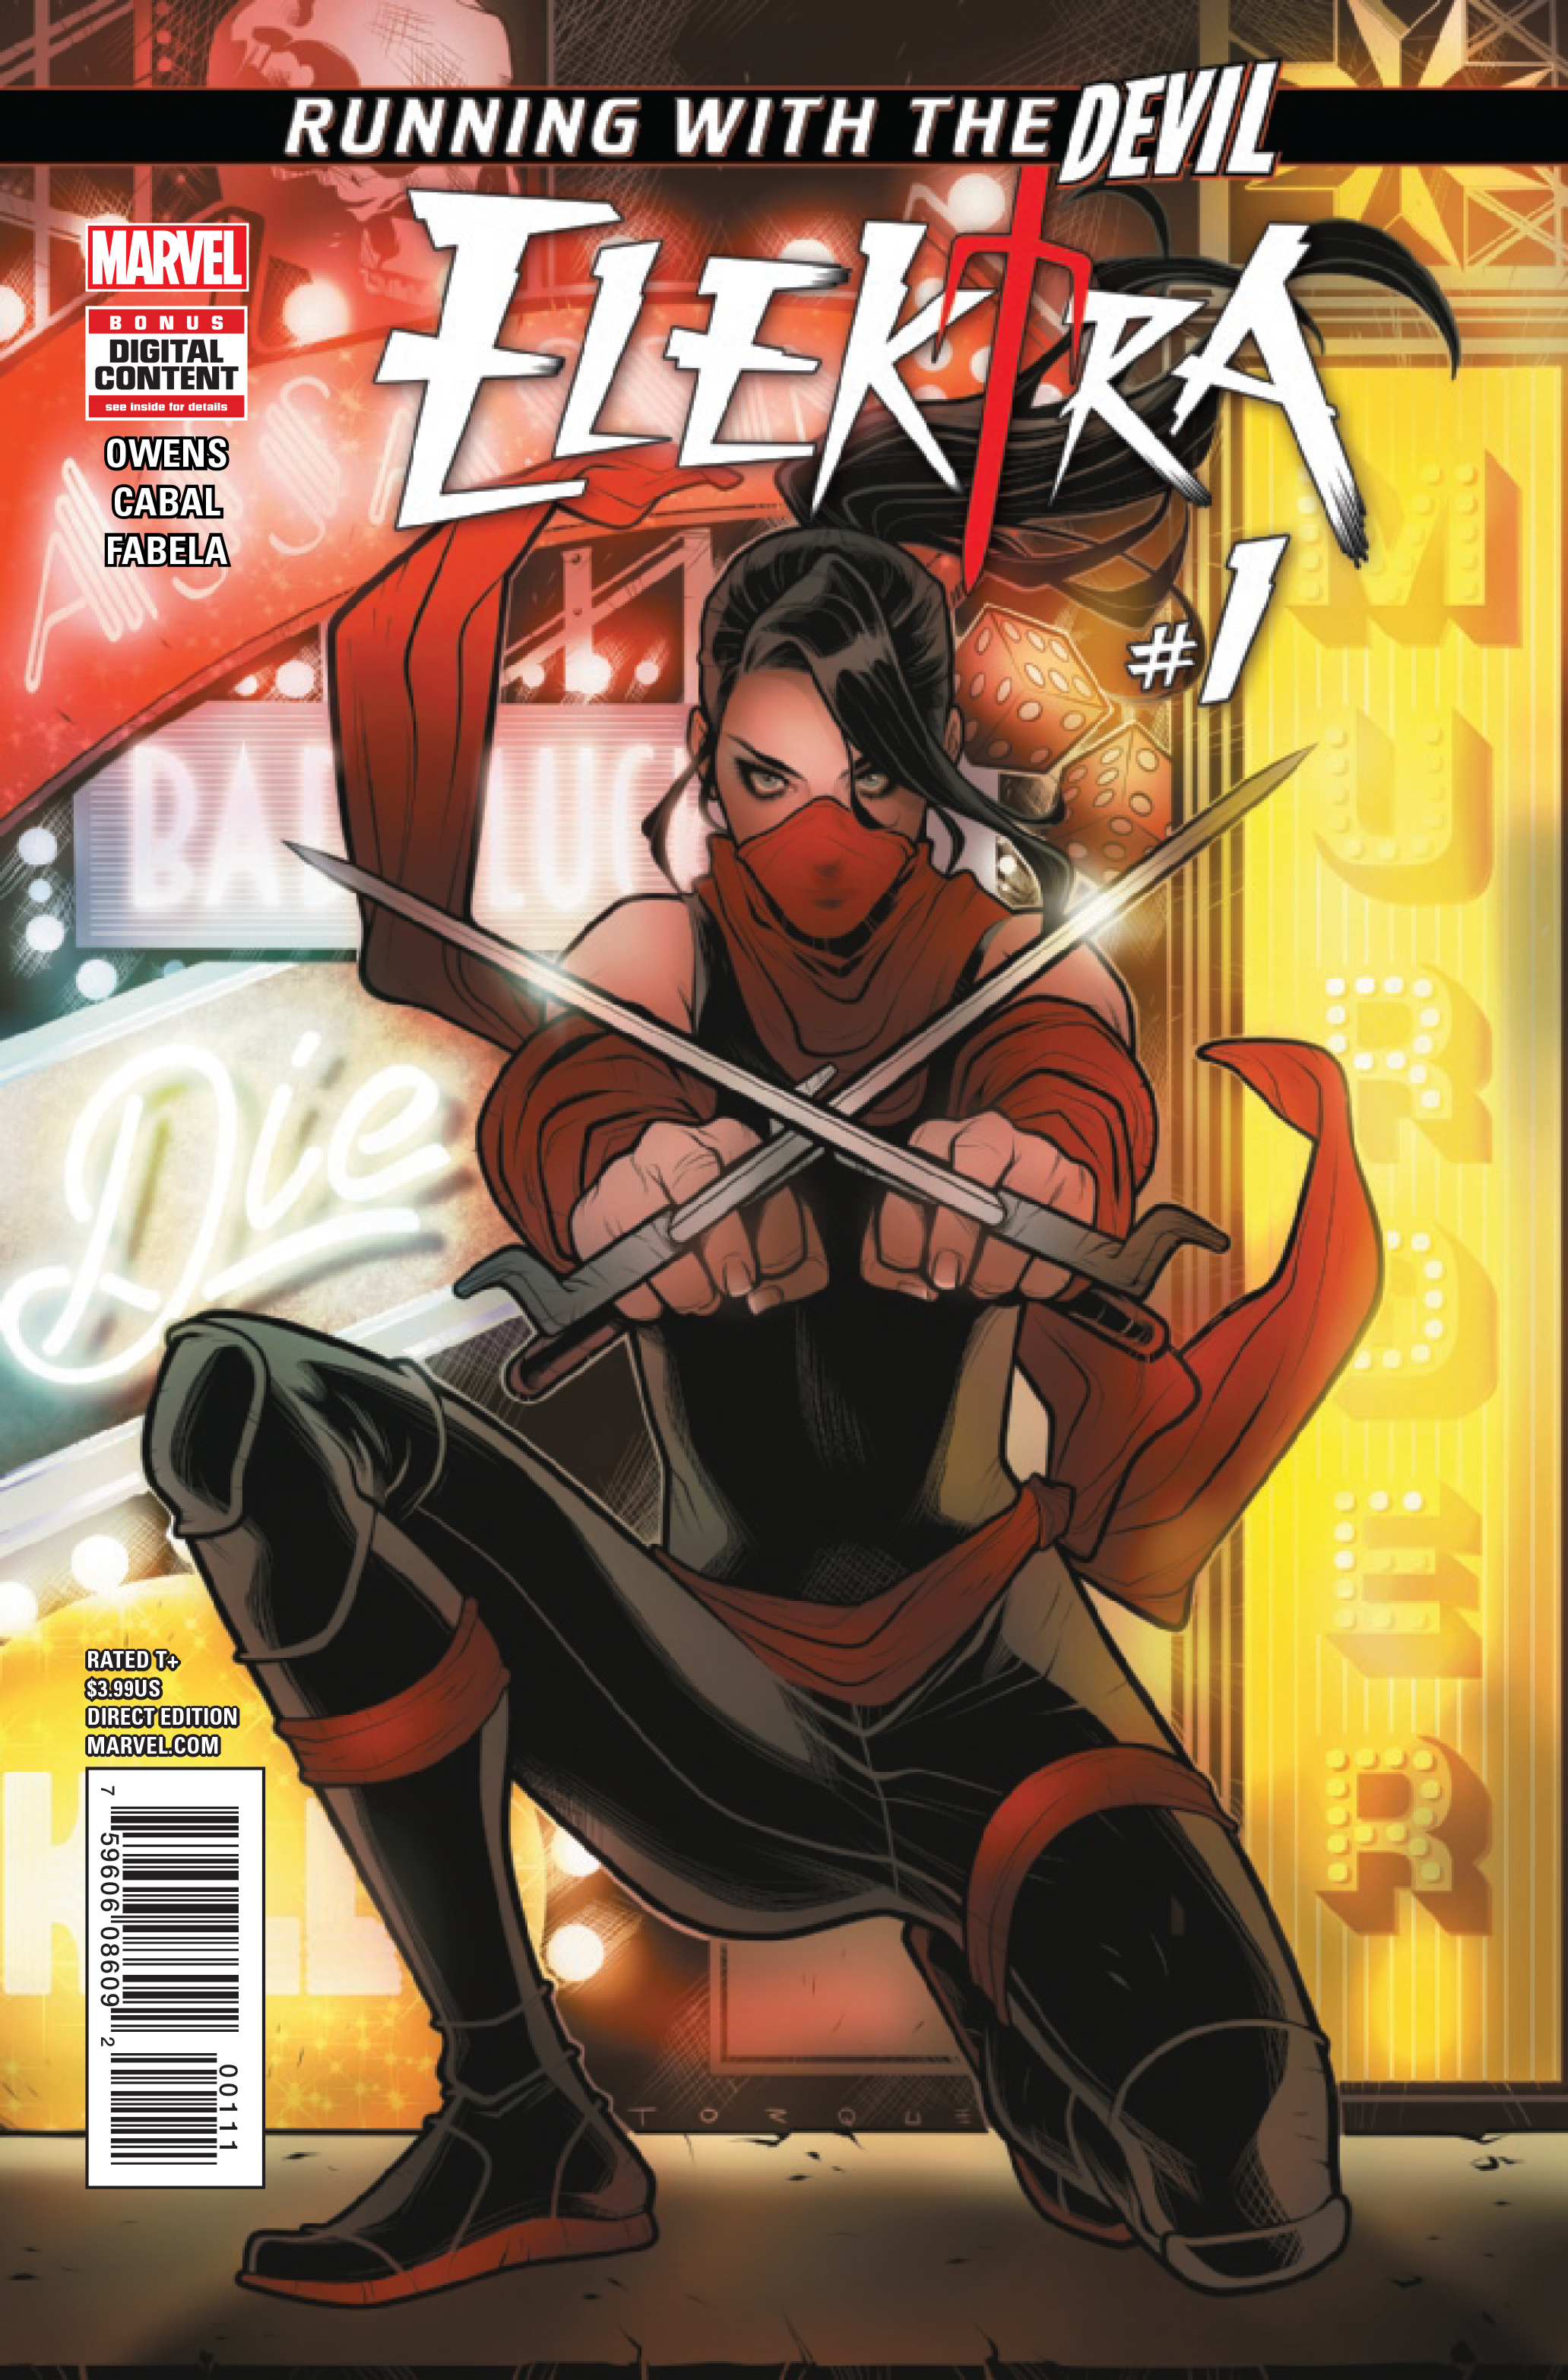 Elektra Assassin #5 Marvel/Epic Comics 12/86 CGC 9.2 1st Appearance of  Chastity